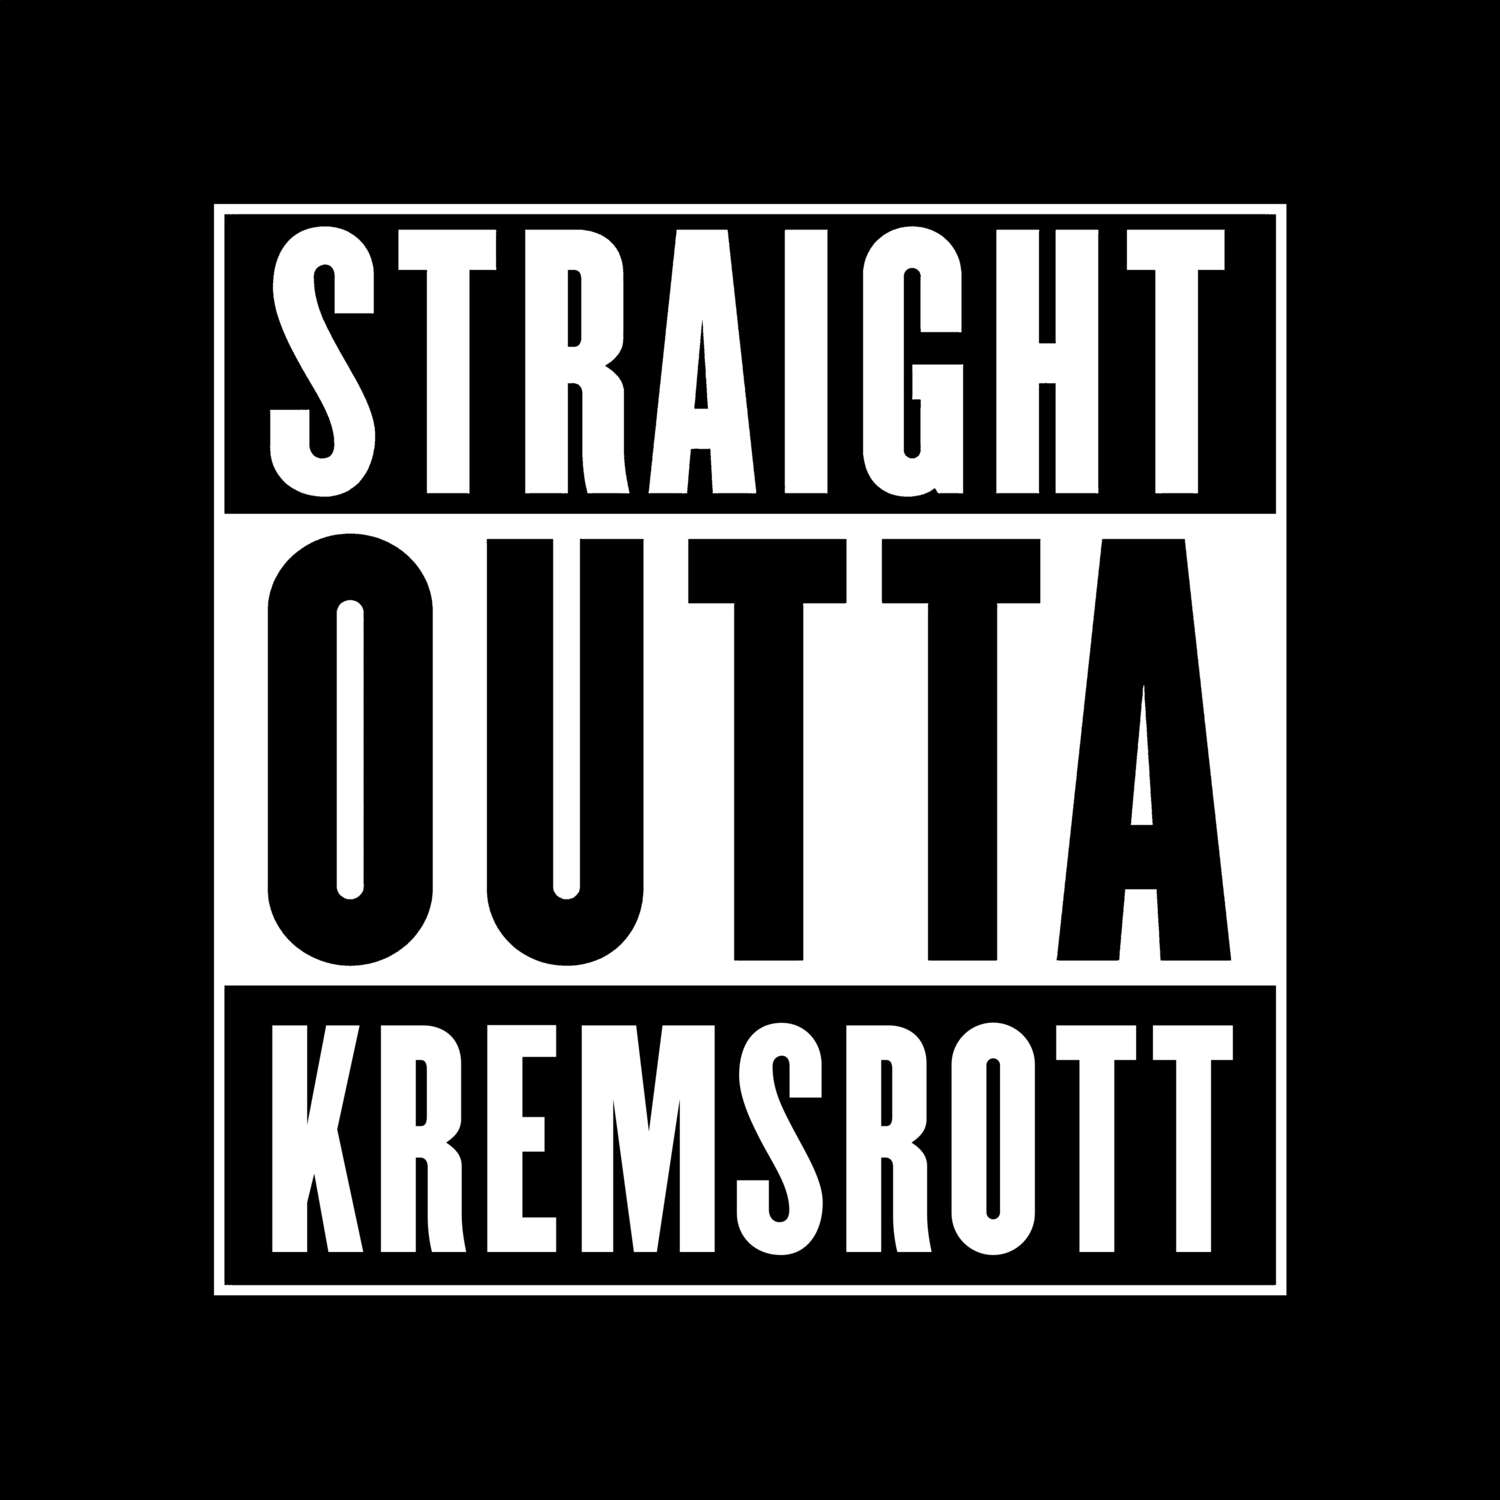 Kremsrott T-Shirt »Straight Outta«